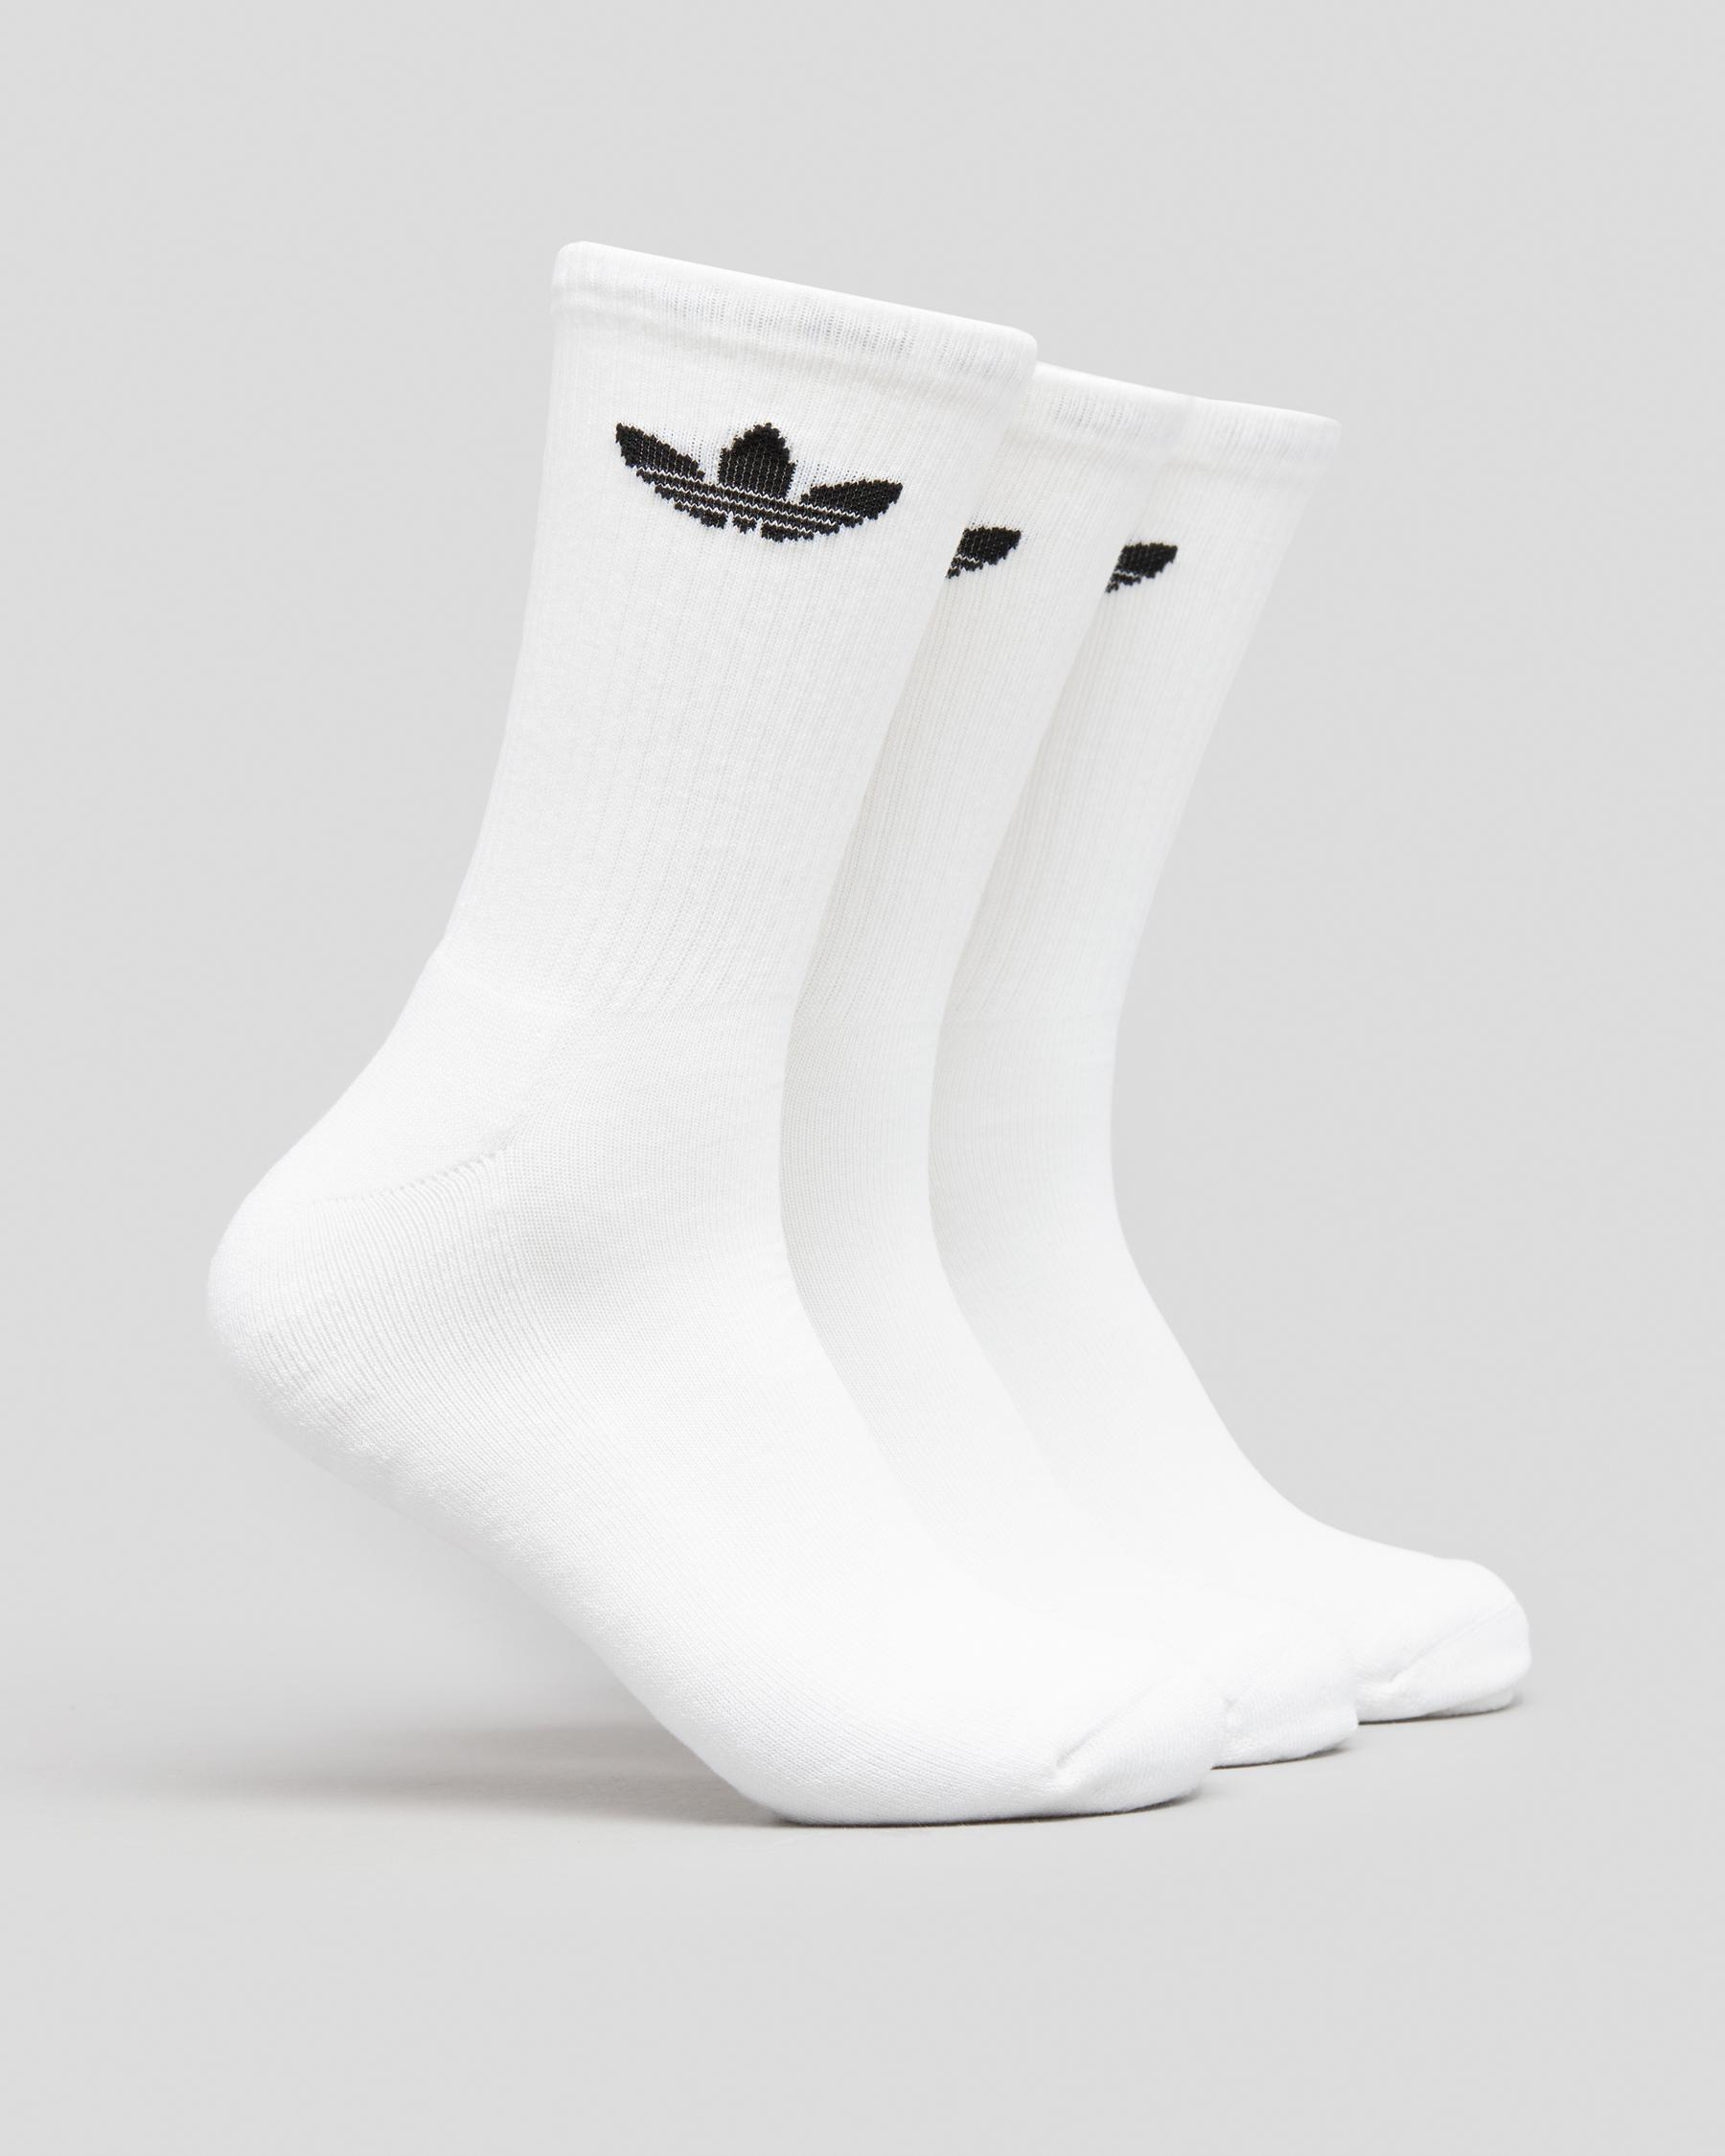 Adidas Cushioned Trefoil Crew Socks 3 Pack In White/black - Fast ...